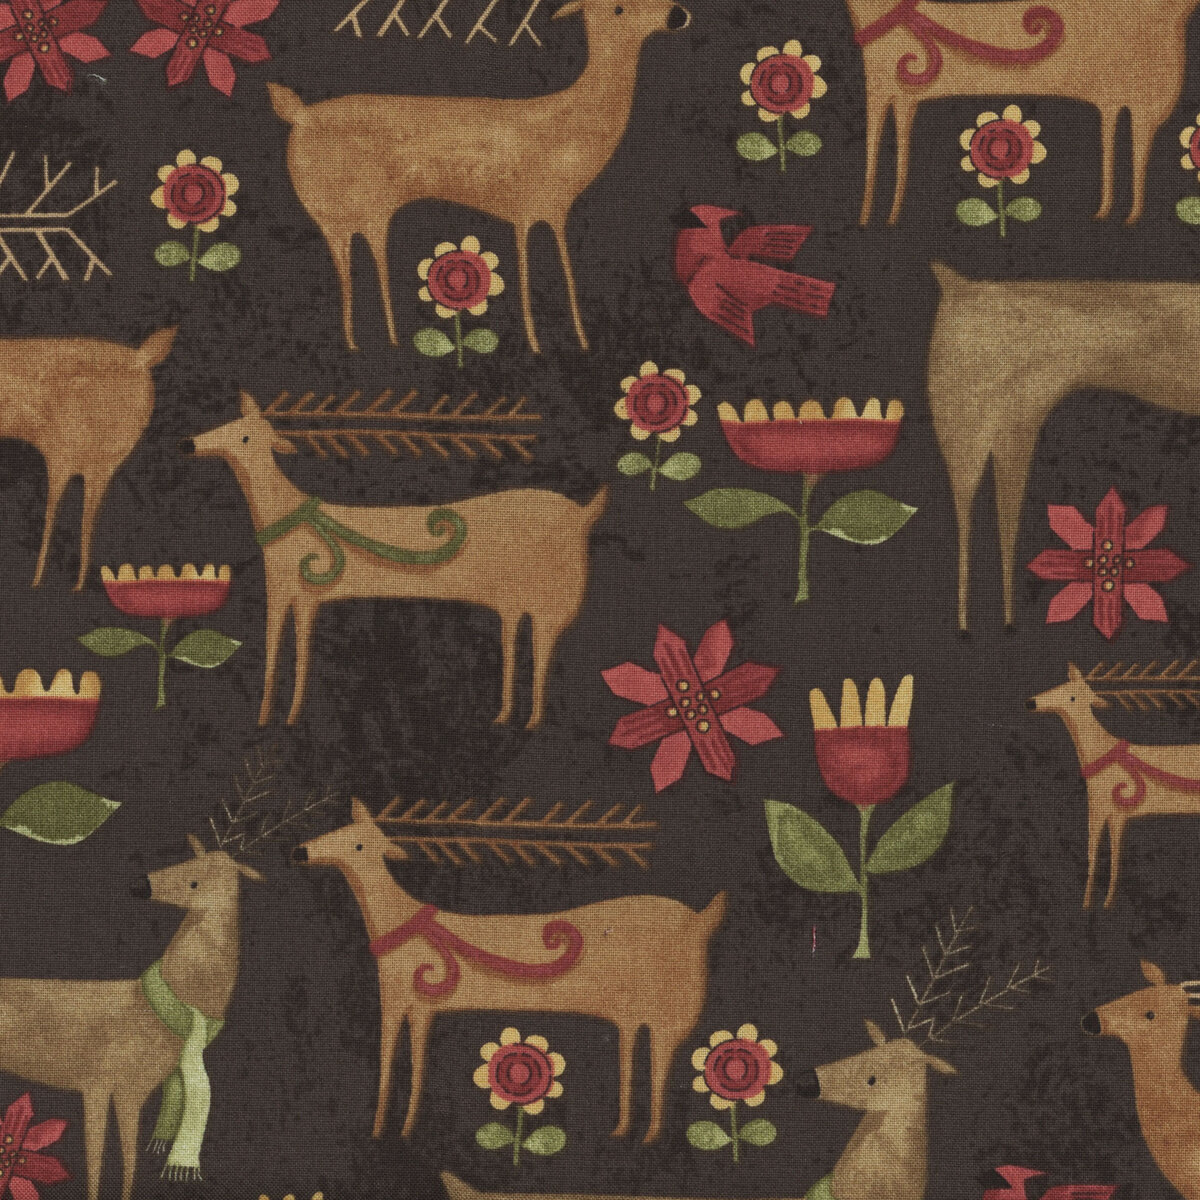 Quilt Fabric, Kringle, Christmas Fabric, Poinsettia's, Reindeer, Holiday  Fabric, Primitive, Folk Art, Whimsical, Teresa Kogut, Riley Blake